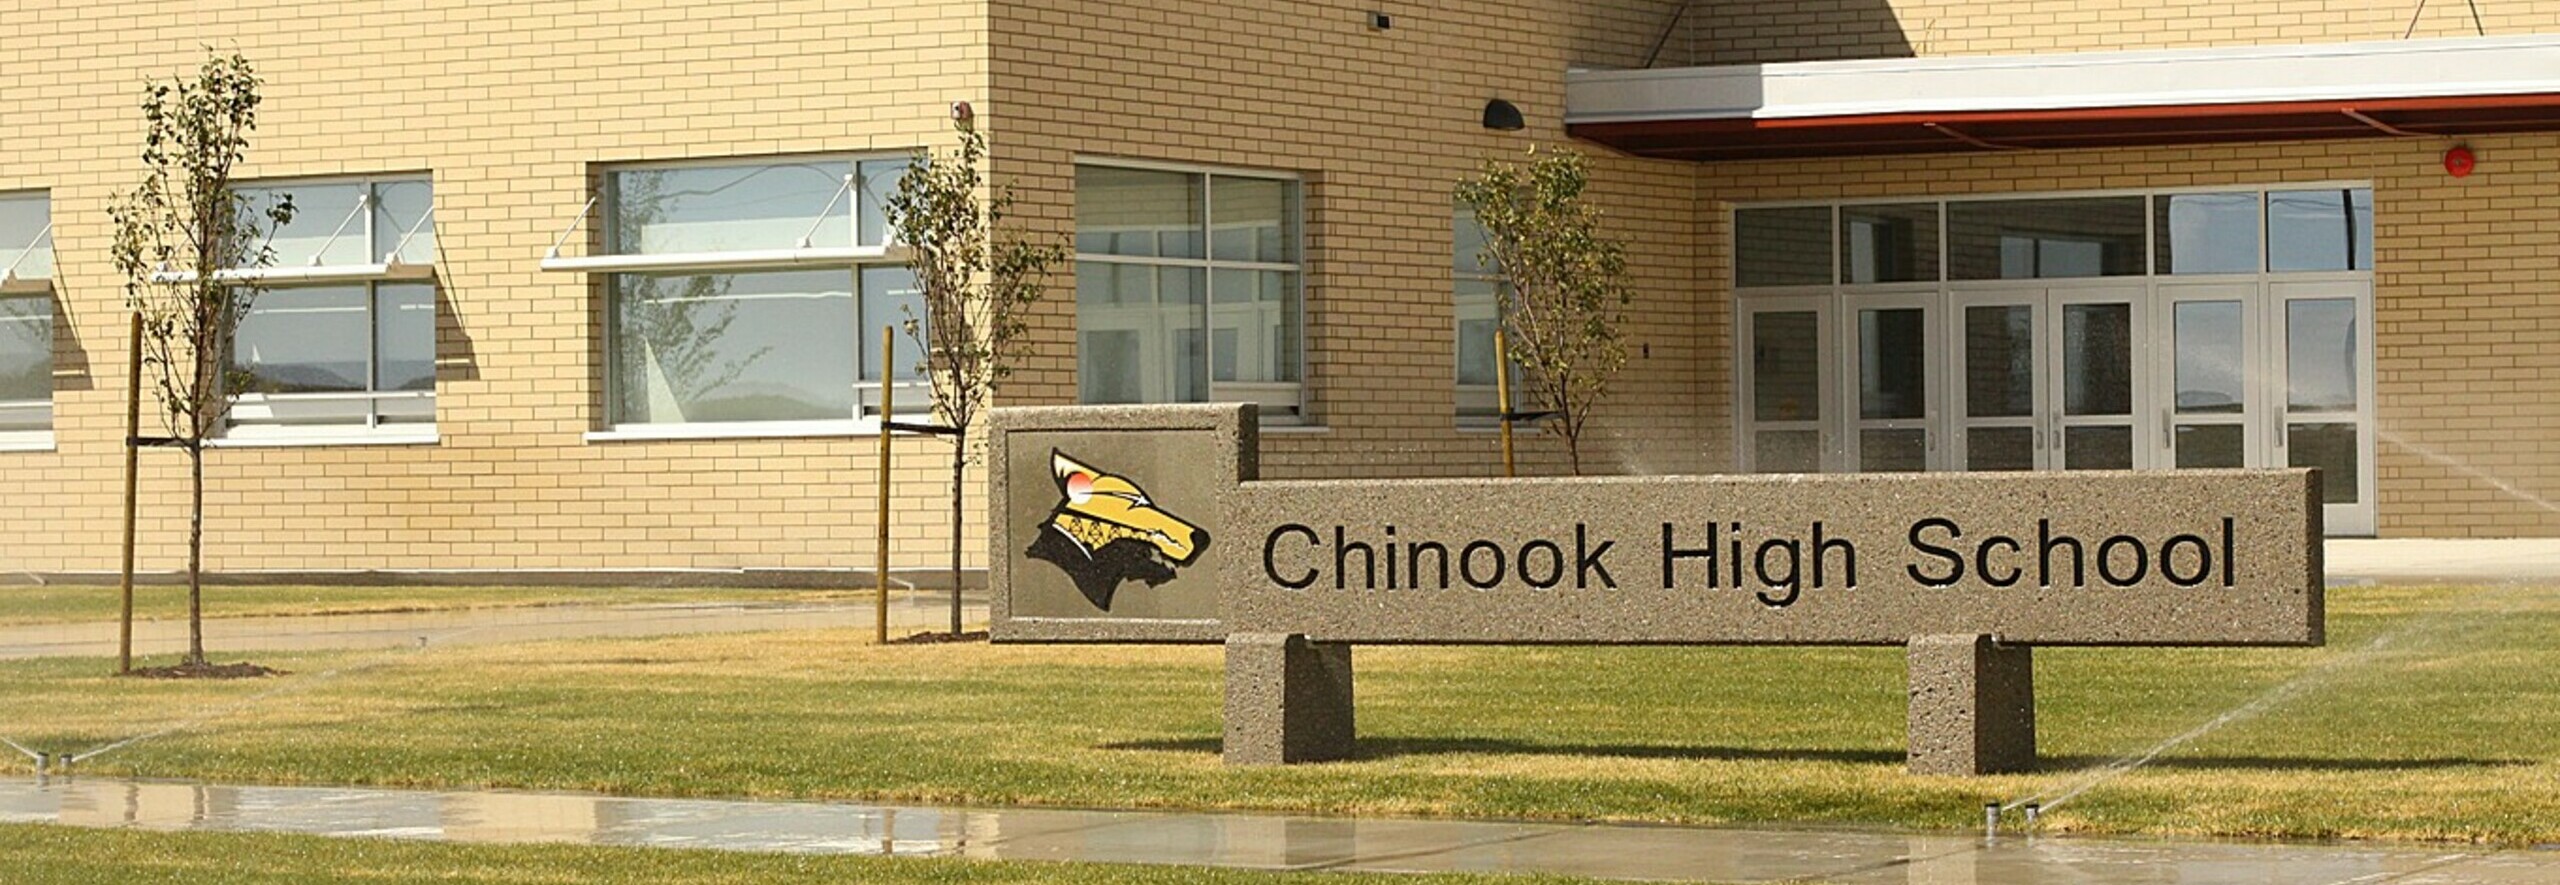 Chinook High School Banner Photo